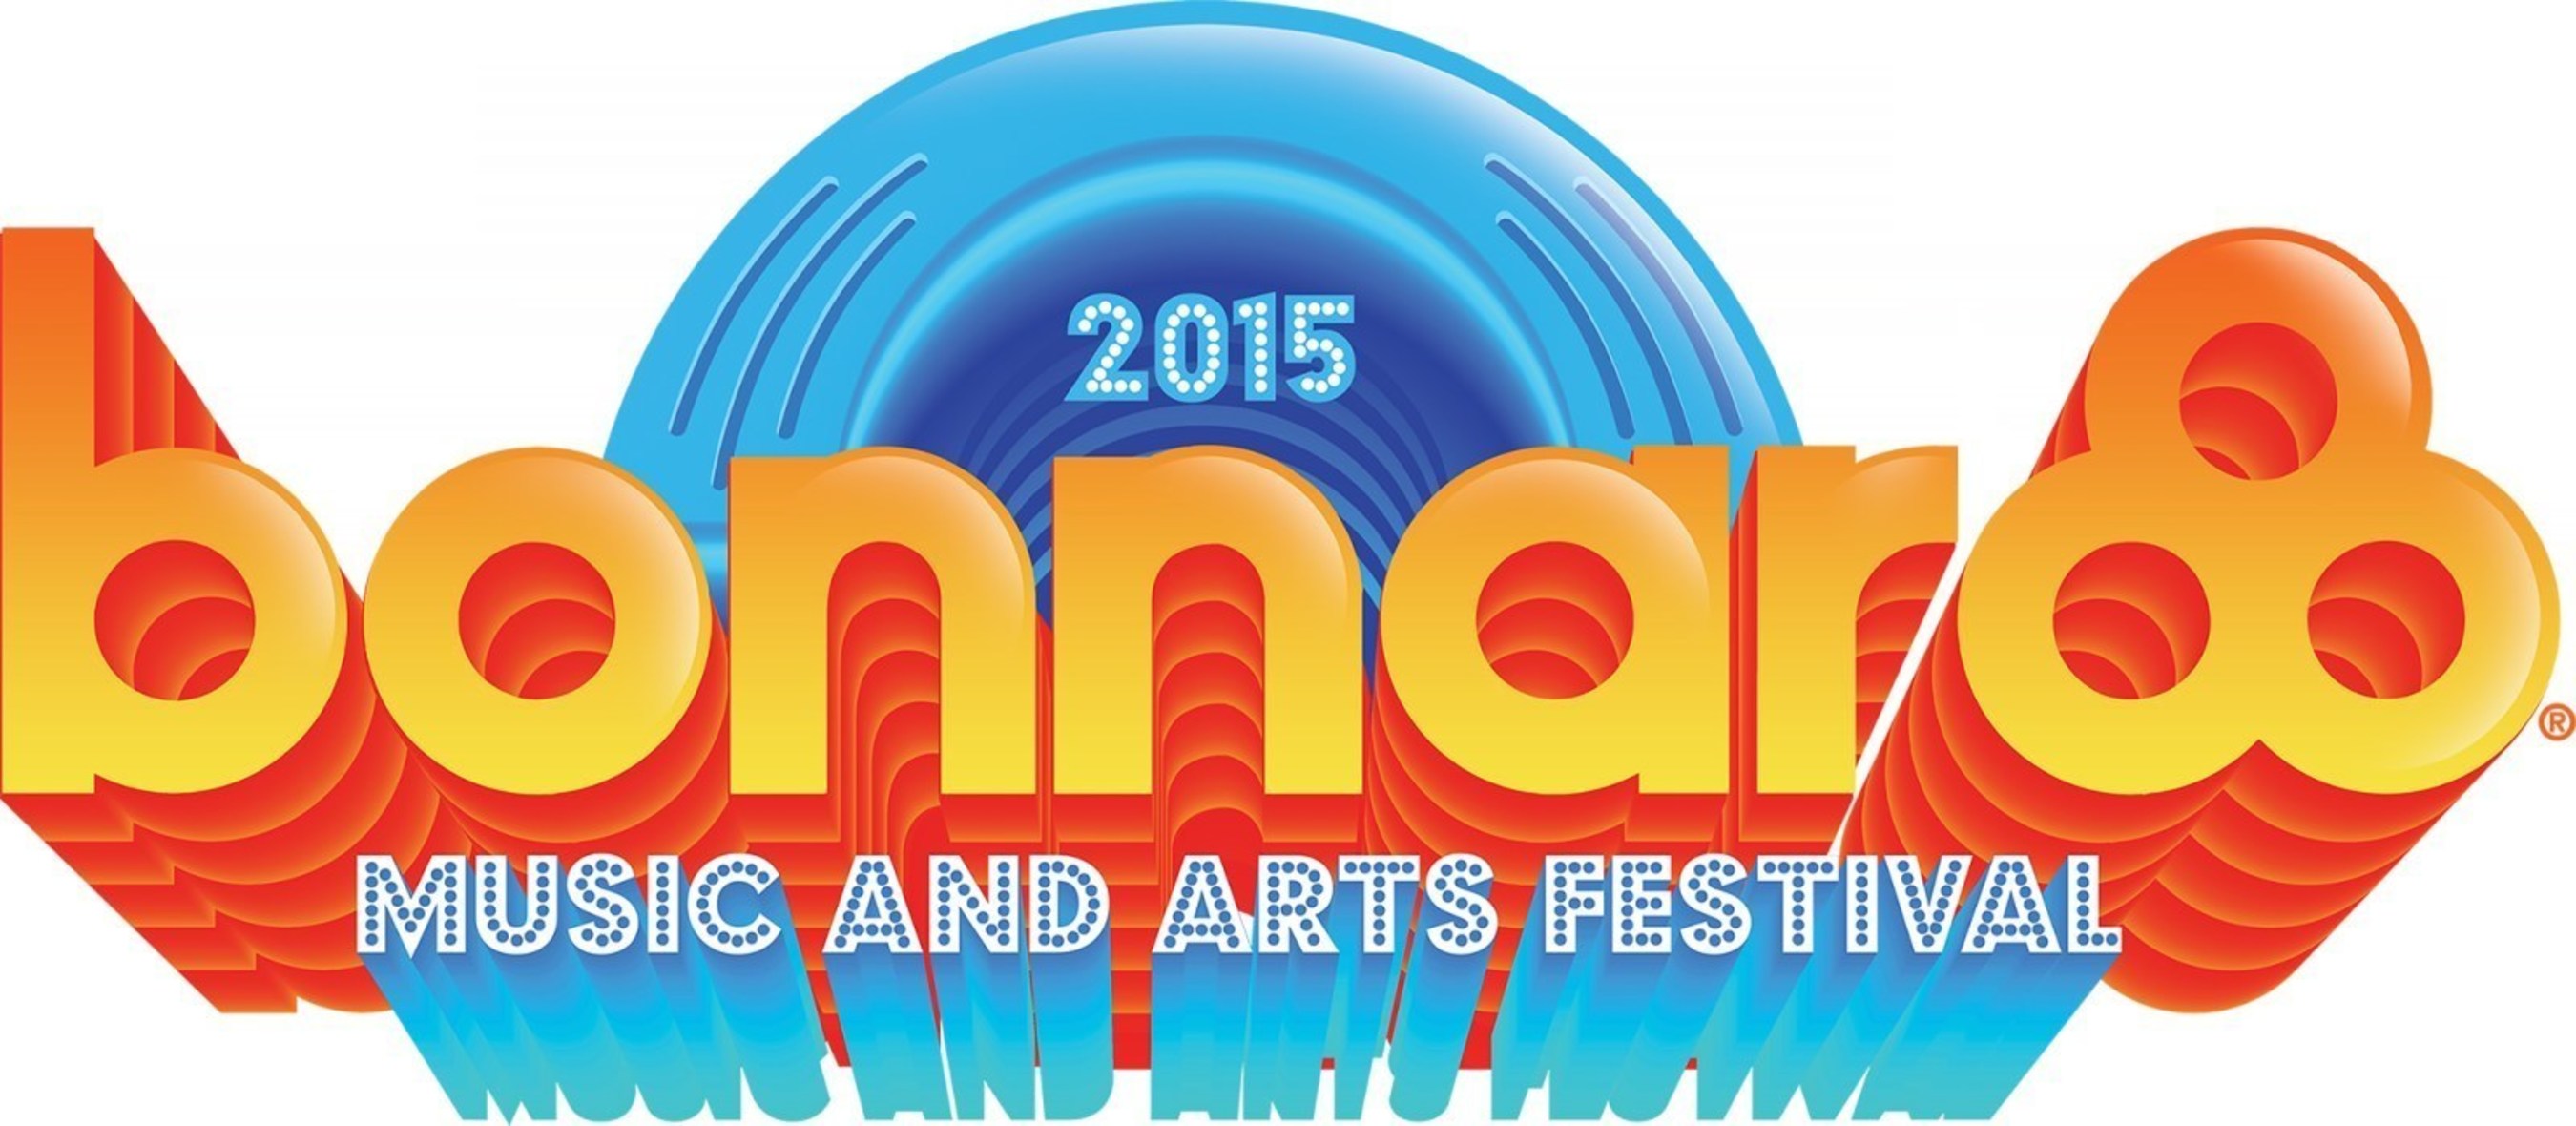 Gnc Announces Partnership With Bonnaroo Music Arts Festival